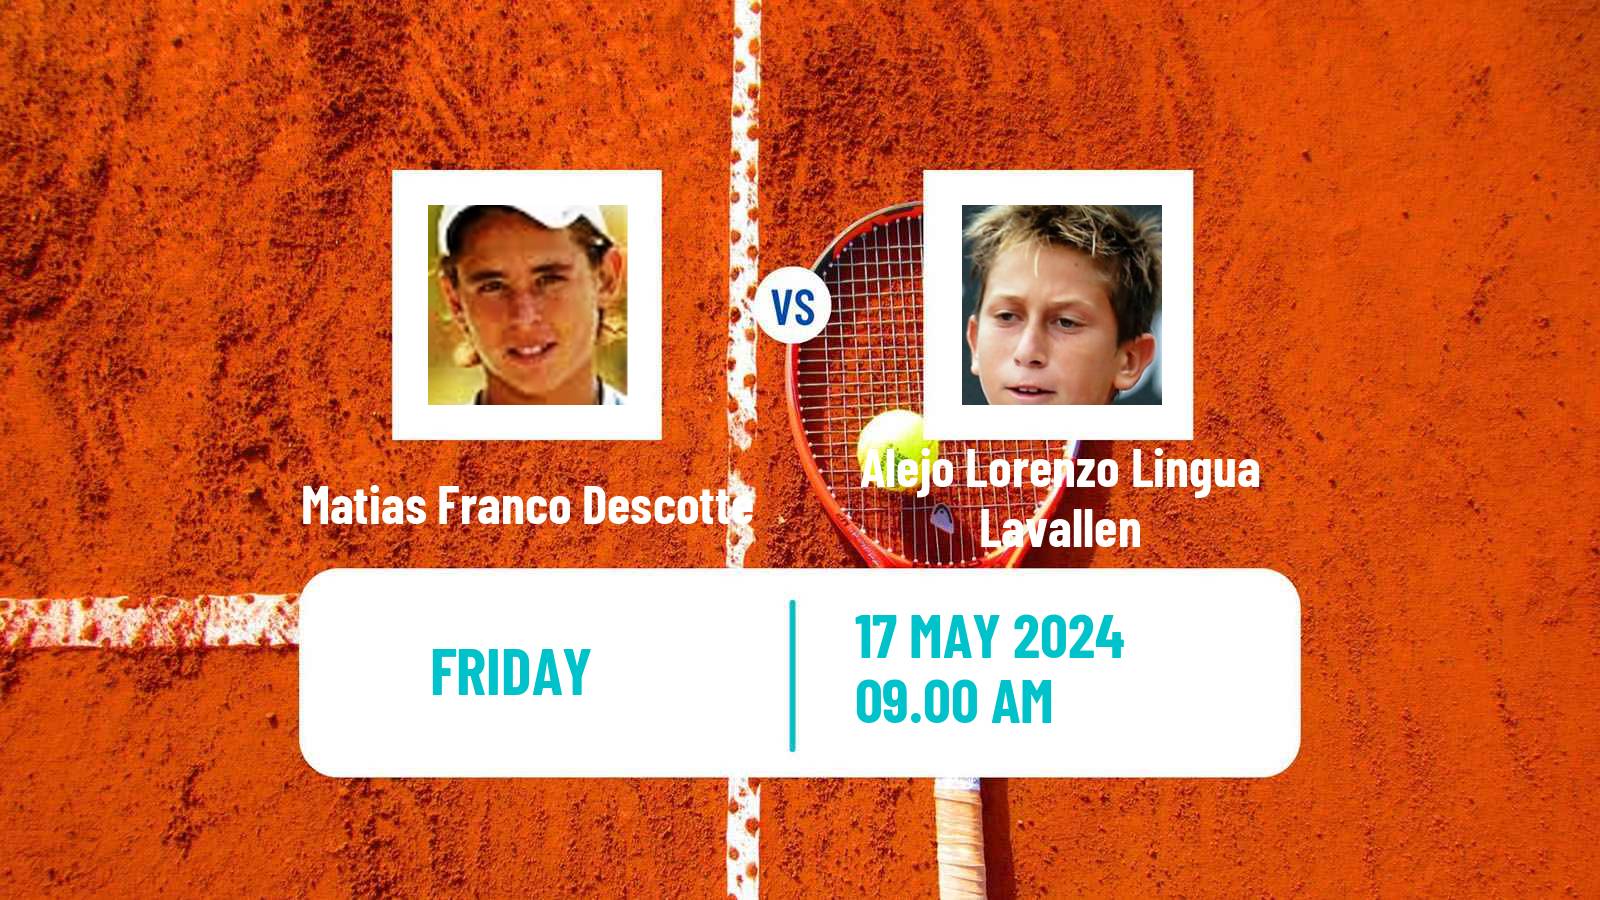 Tennis ITF M15 Neuquen Men Matias Franco Descotte - Alejo Lorenzo Lingua Lavallen